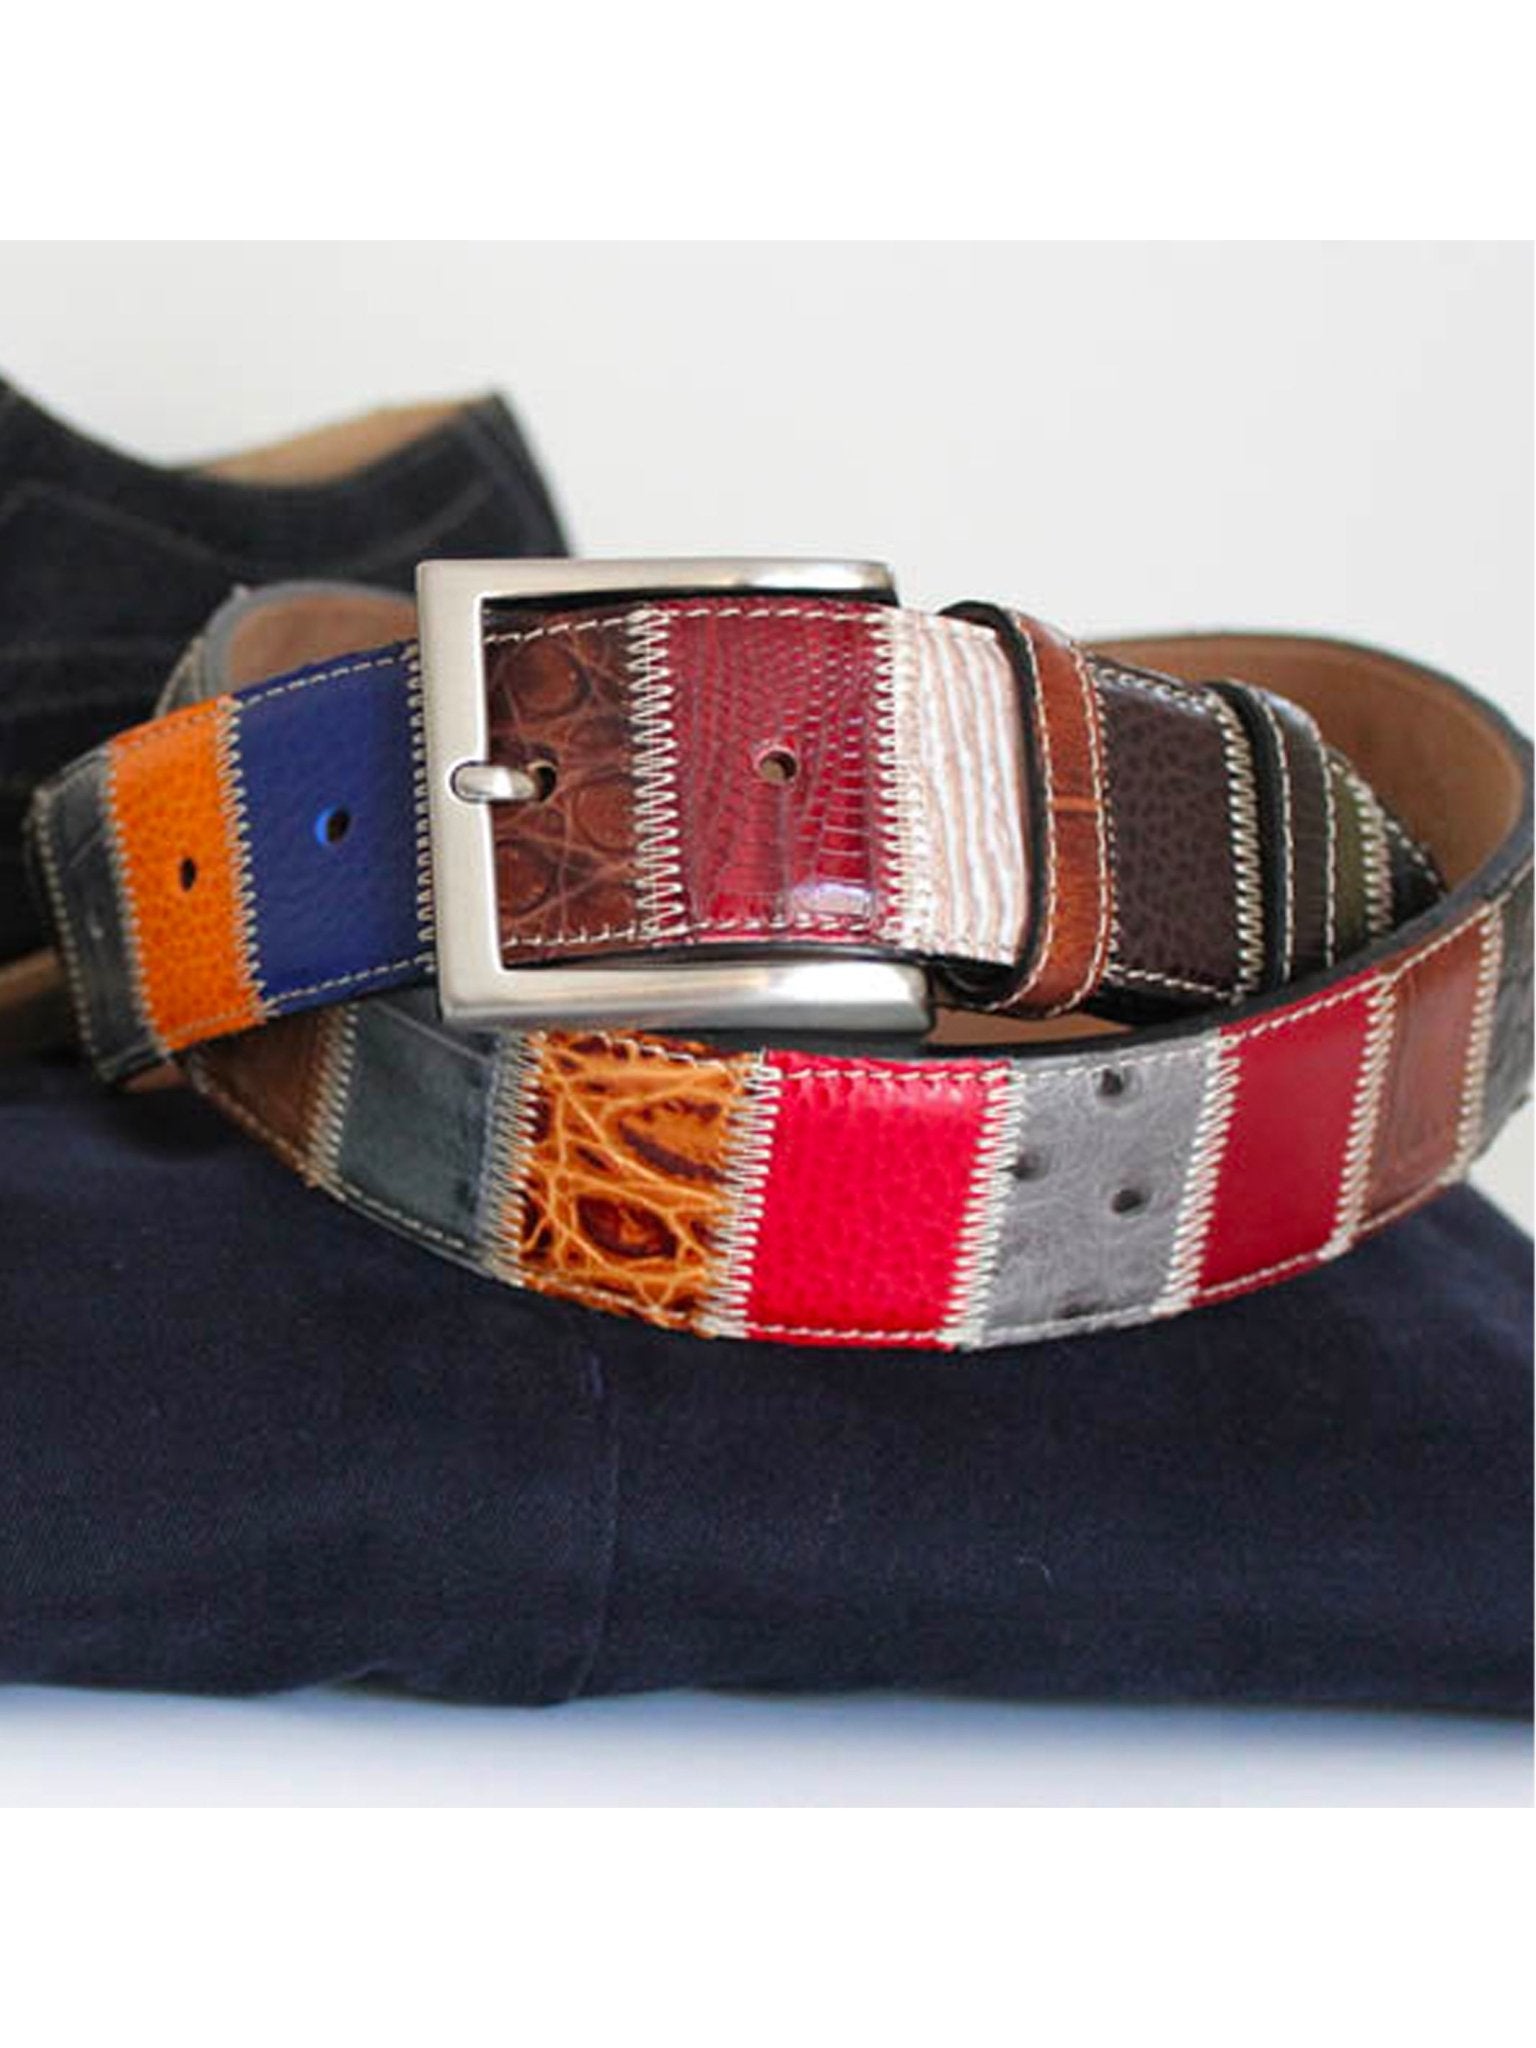 4elementsclothingRobert CharlesRobert Charles Belts - 1587 Patchwork Mens Leather Belt 35mm - Made in Italy - 100% LeatherBelts1587/35/S